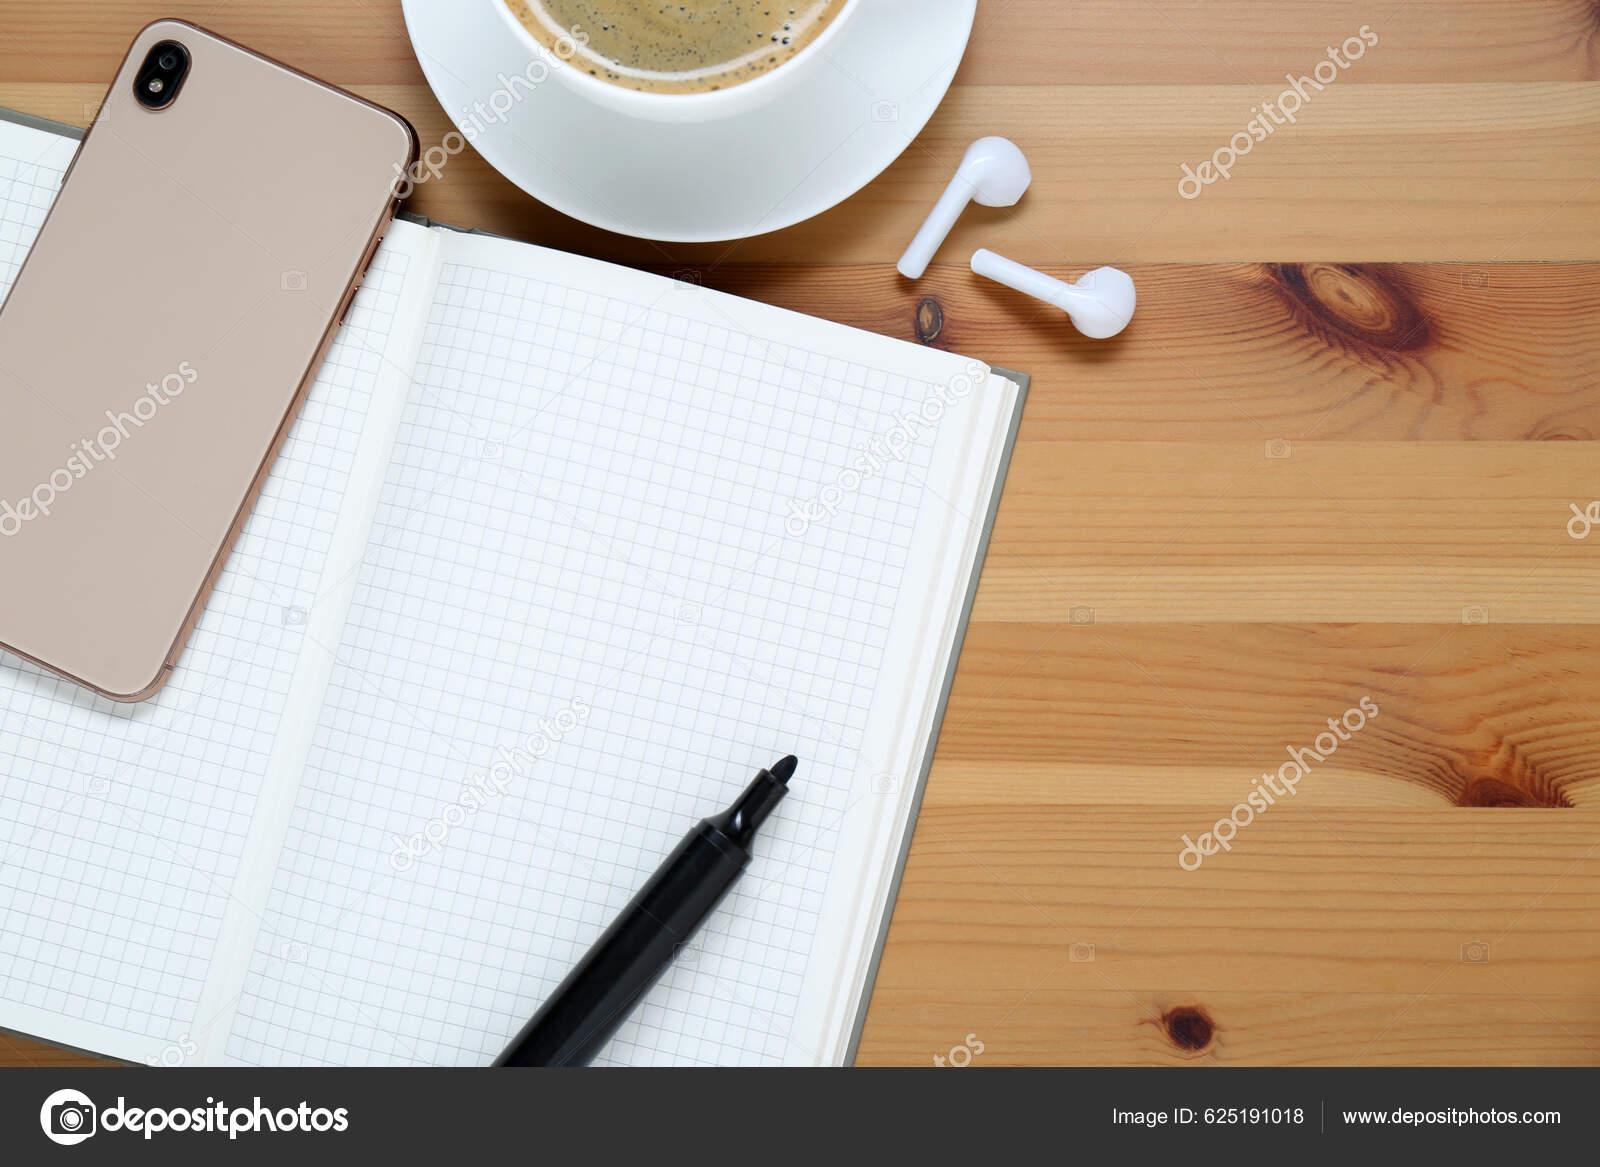 https://st5.depositphotos.com/16122460/62519/i/1600/depositphotos_625191018-stock-photo-empty-notebook-coffee-smartphone-stationery.jpg